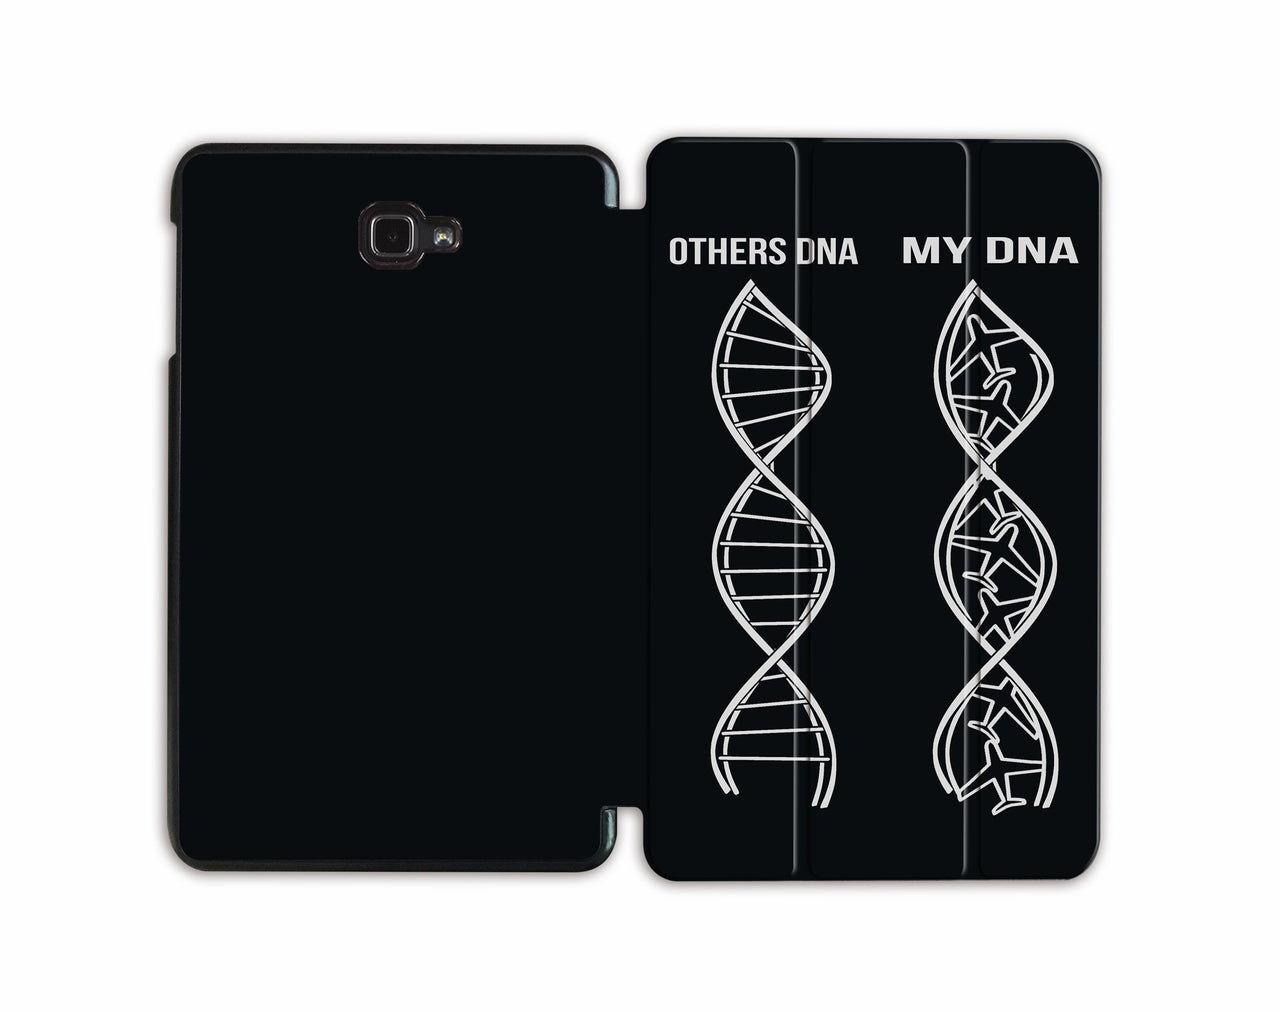 Aviation DNA Designed Samsung Cases